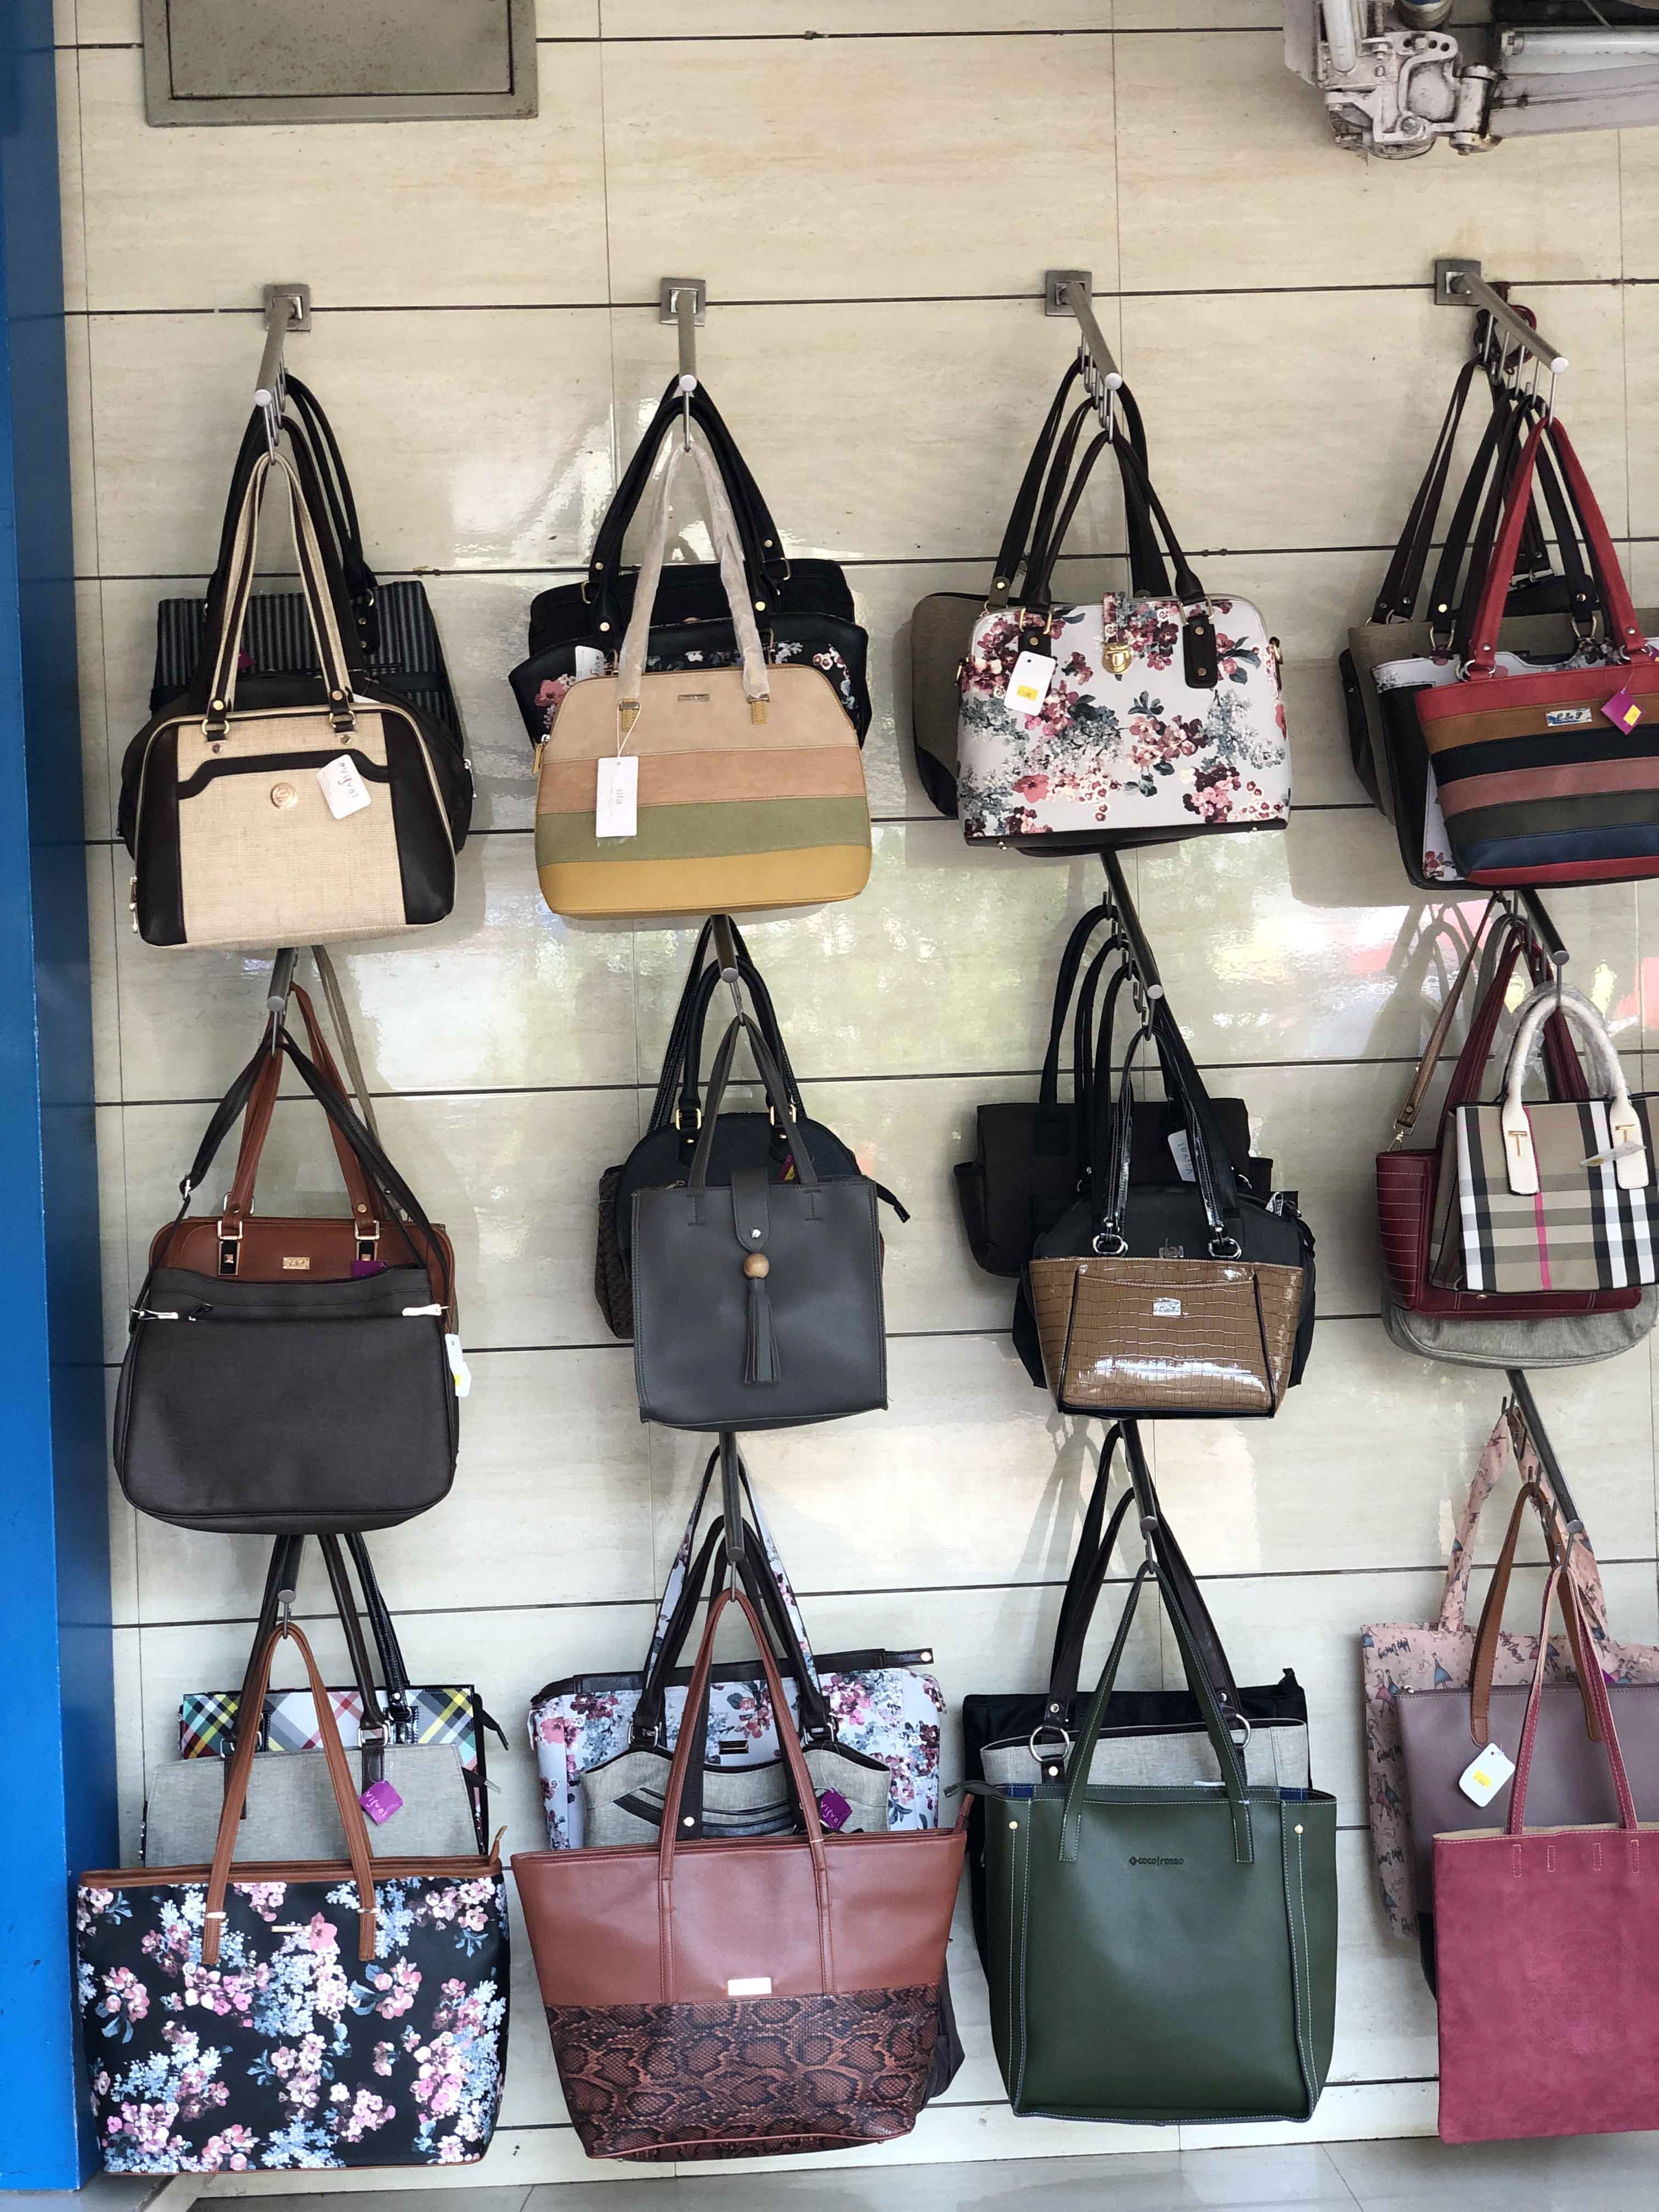 Khadim Brown Clutch Bag Wallet for Women (3484143)